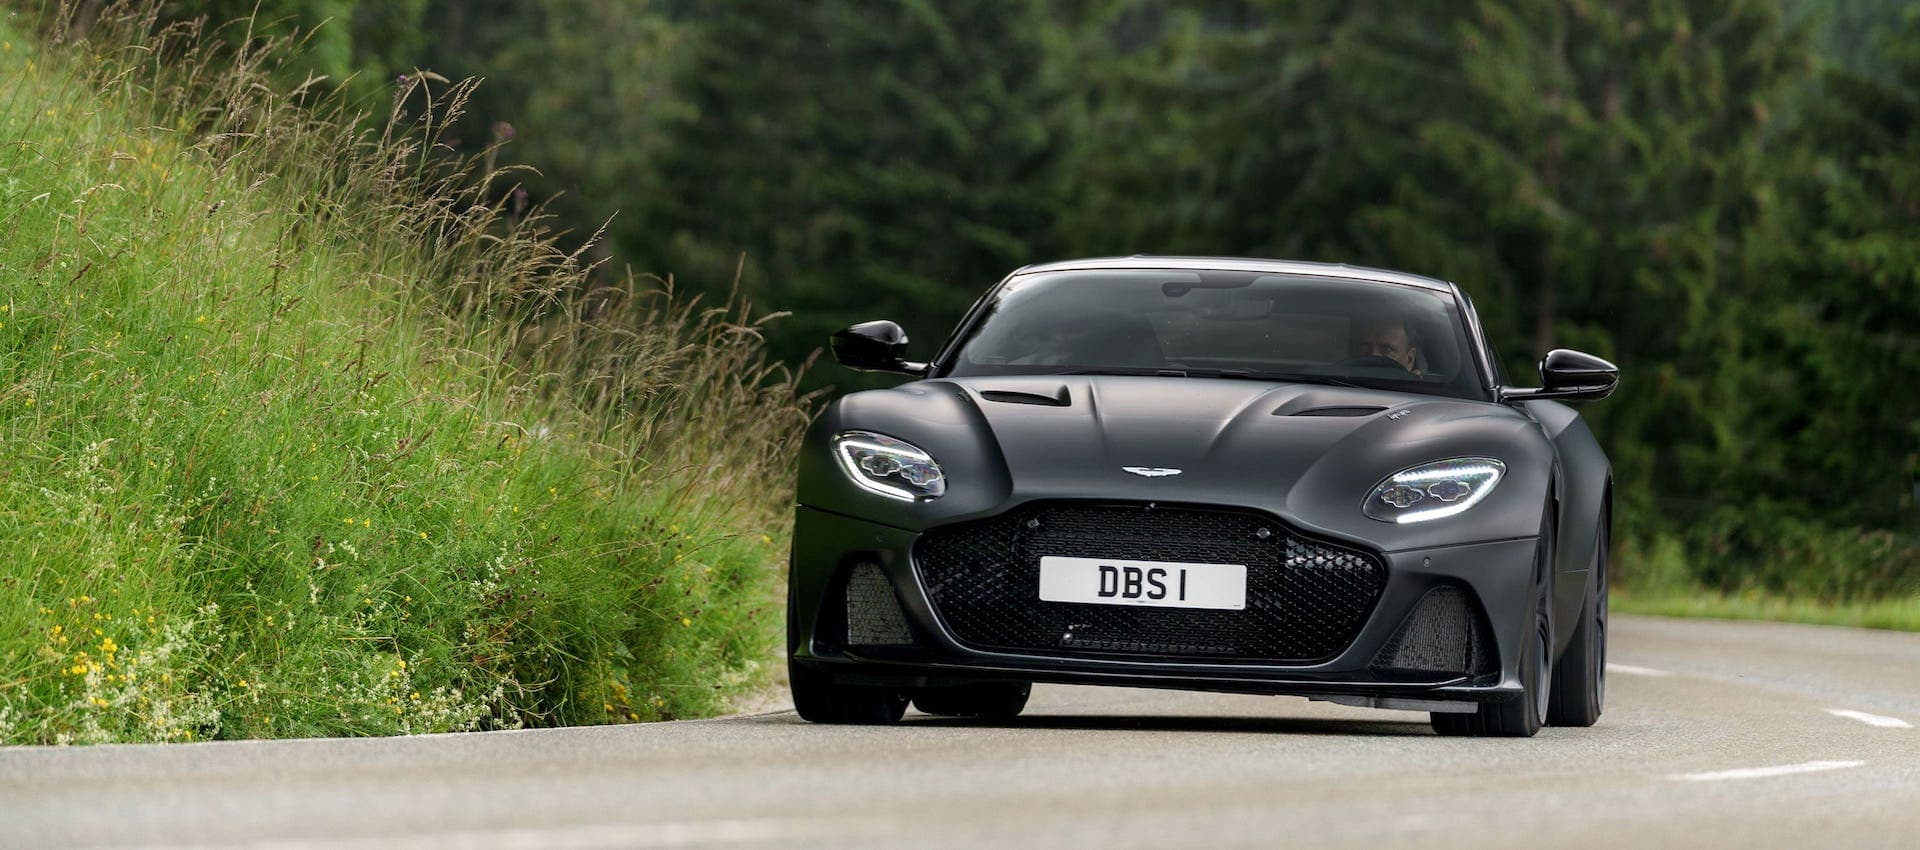 Aston Martin DBS Superleggera review 2019